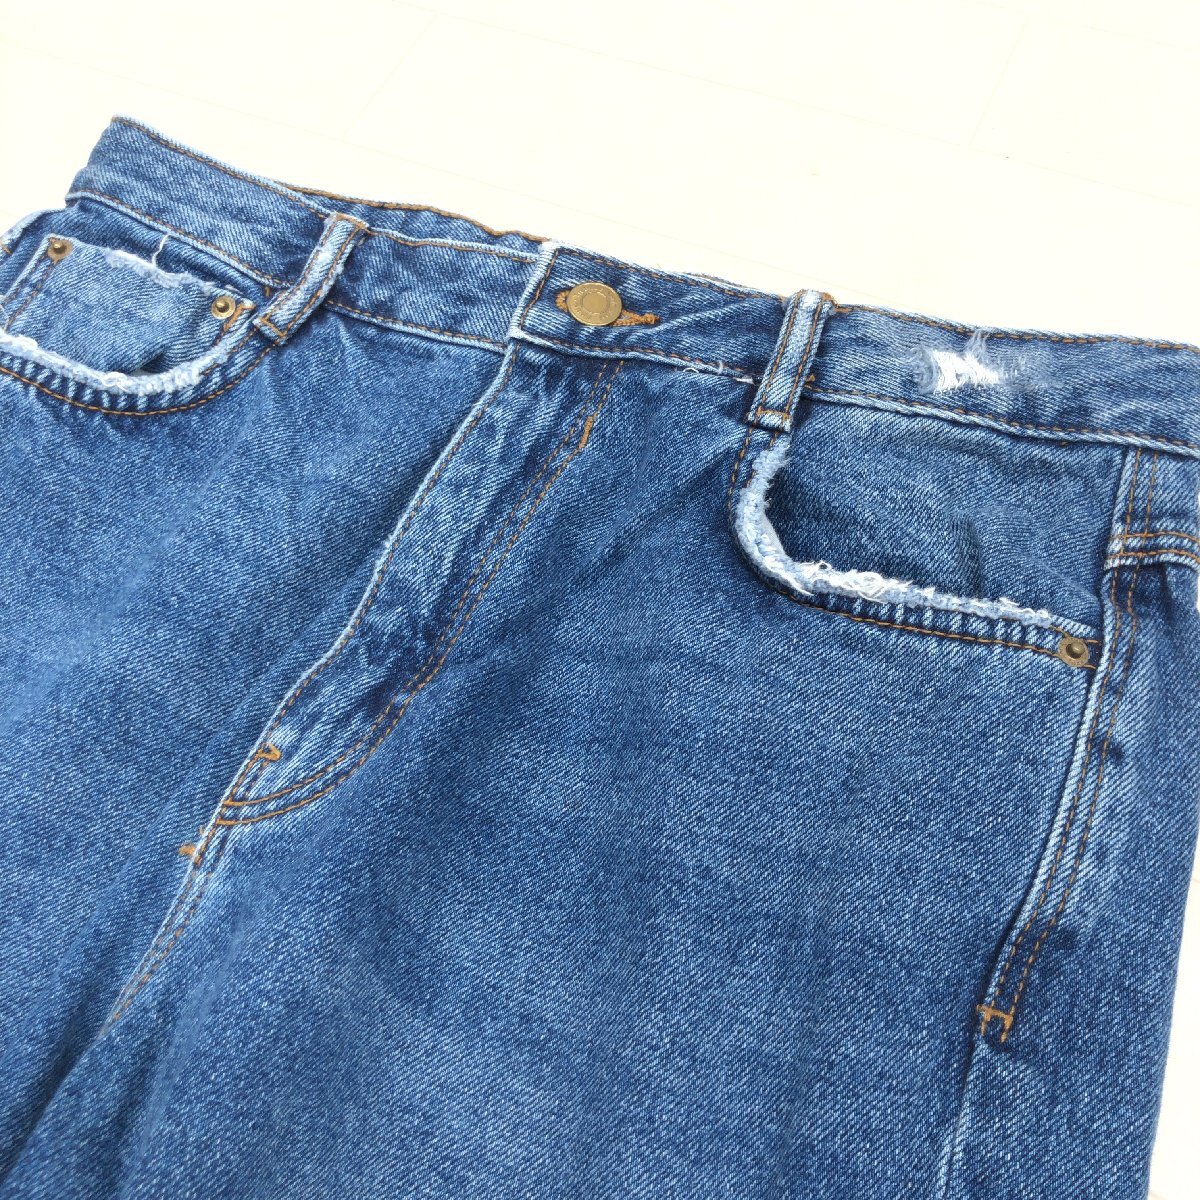 ZARA trafaluc denimwear Zara damage processing Denim pants 28 w74 dark blue indigo jeans cut off lady's for women 